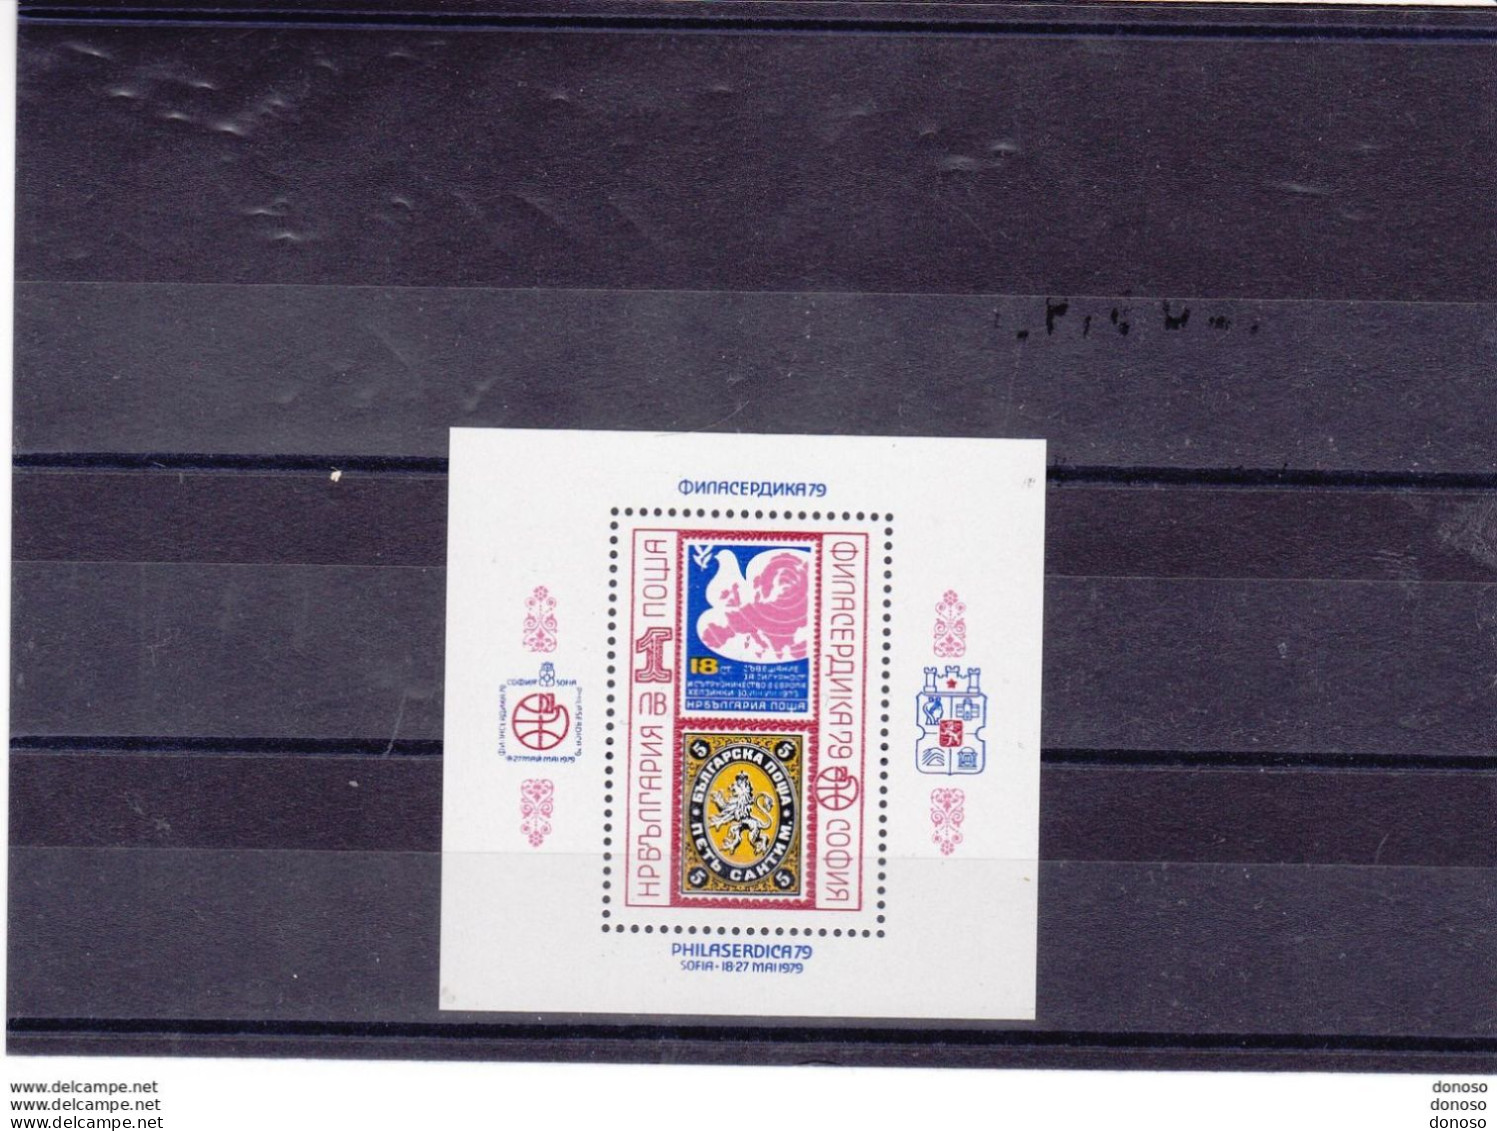 BULGARIE 1979 Philaserdica, Timbres Sur Timbres Yvert BF 85, Michel Block 90 NEUF** MNH Cote 12 Euros - Blocks & Sheetlets